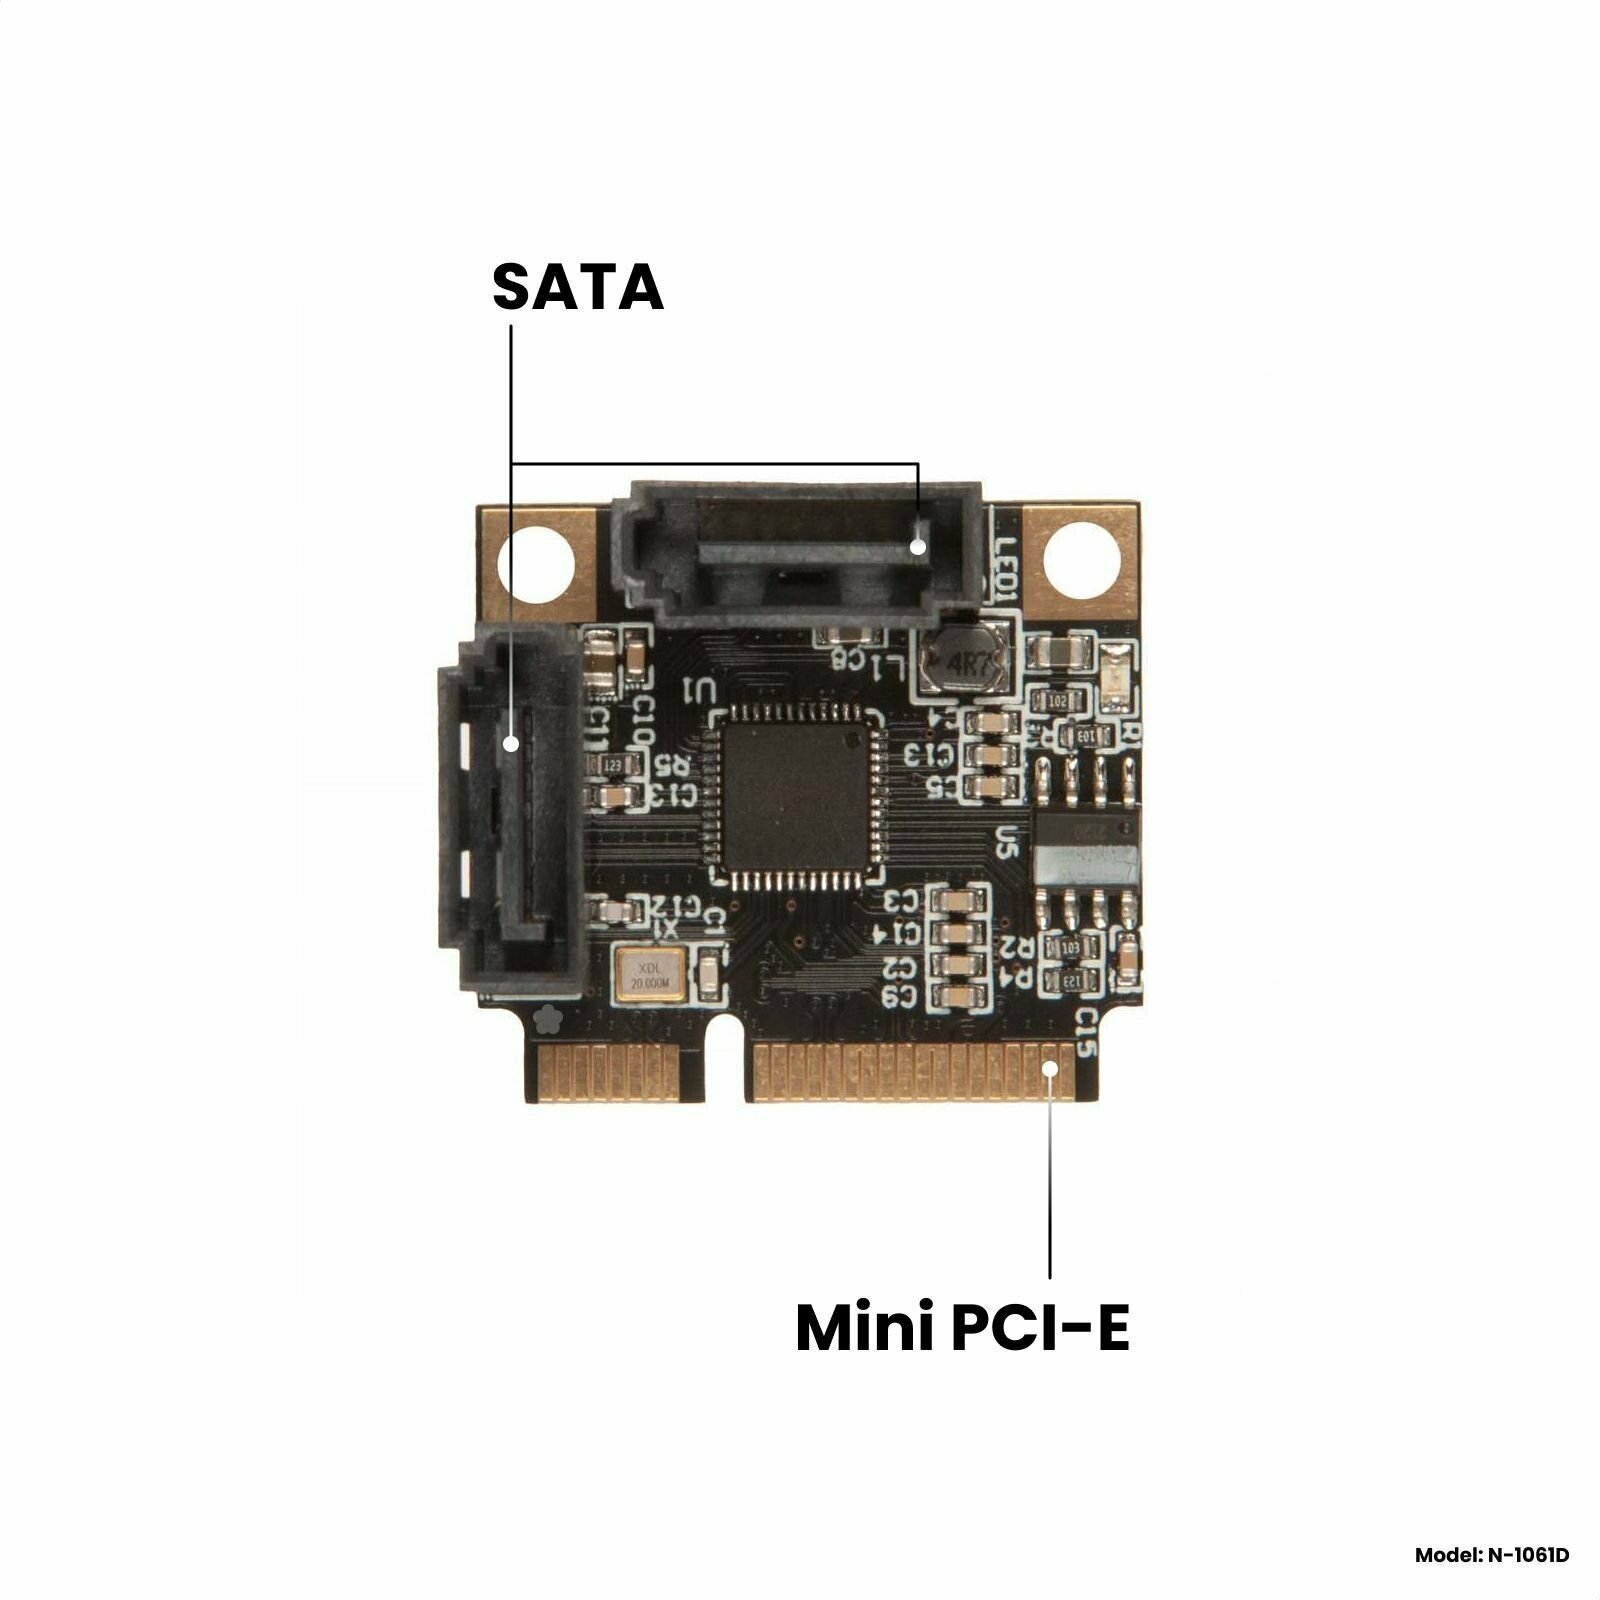 Адаптер-переходник (плата расширения) Mini PCI-E на 2 порта SATA Gen3 (6 Гбит/с) NFHK N-1061D